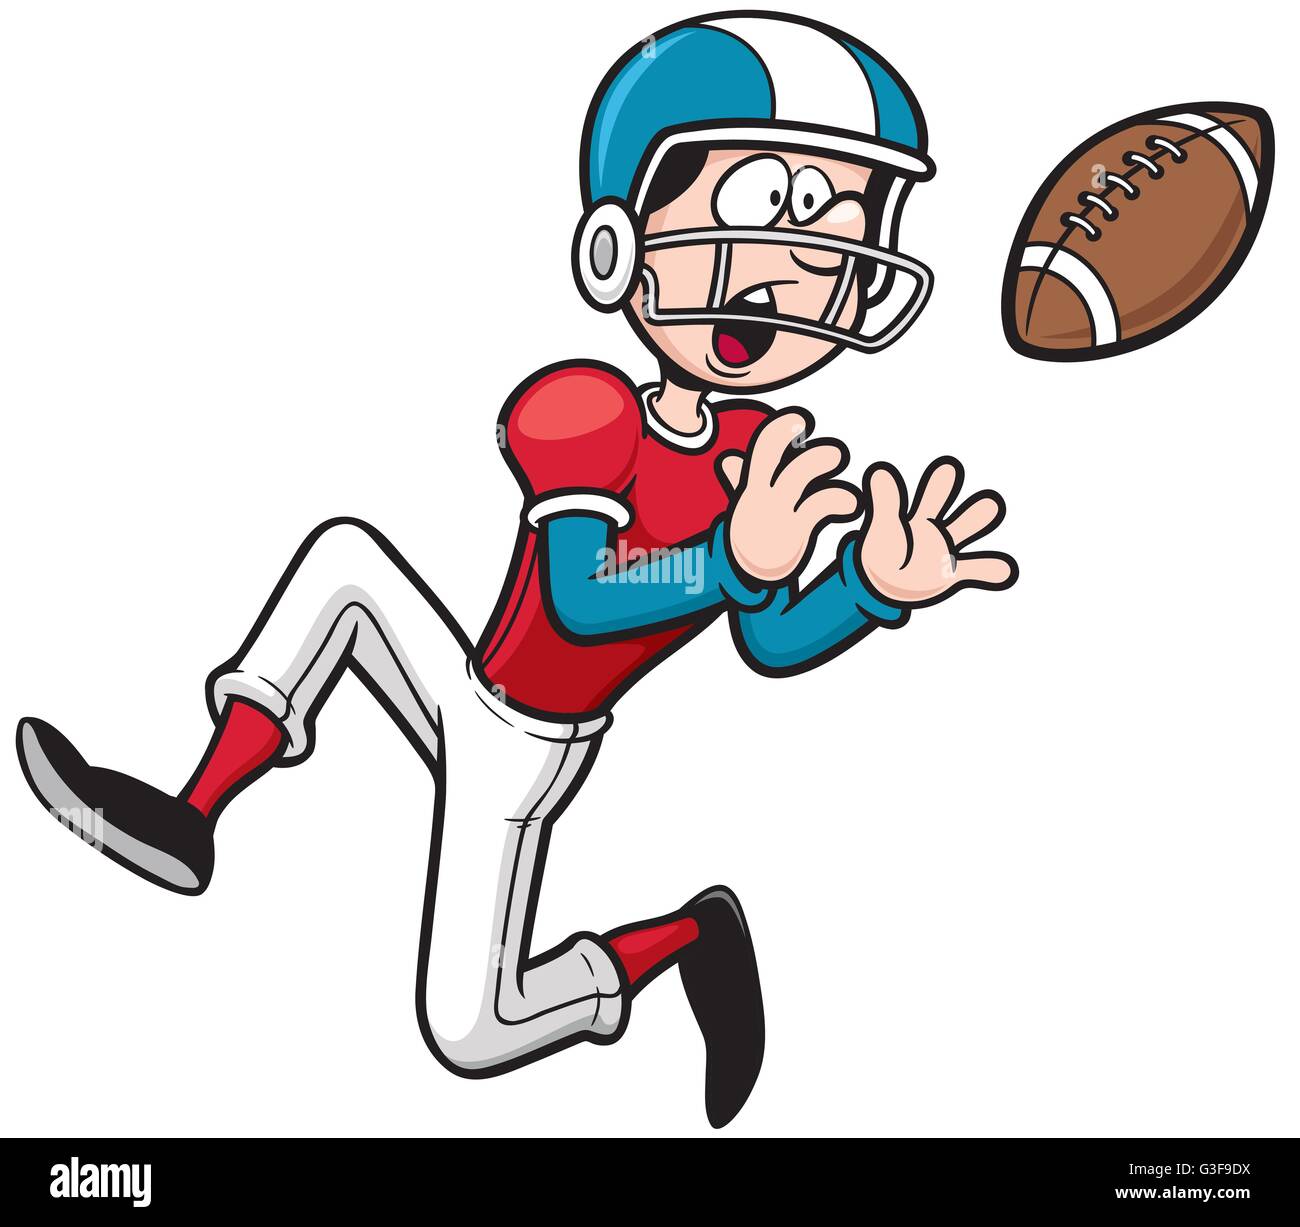 Vector illustration of Cartoon American football player Stock Vector